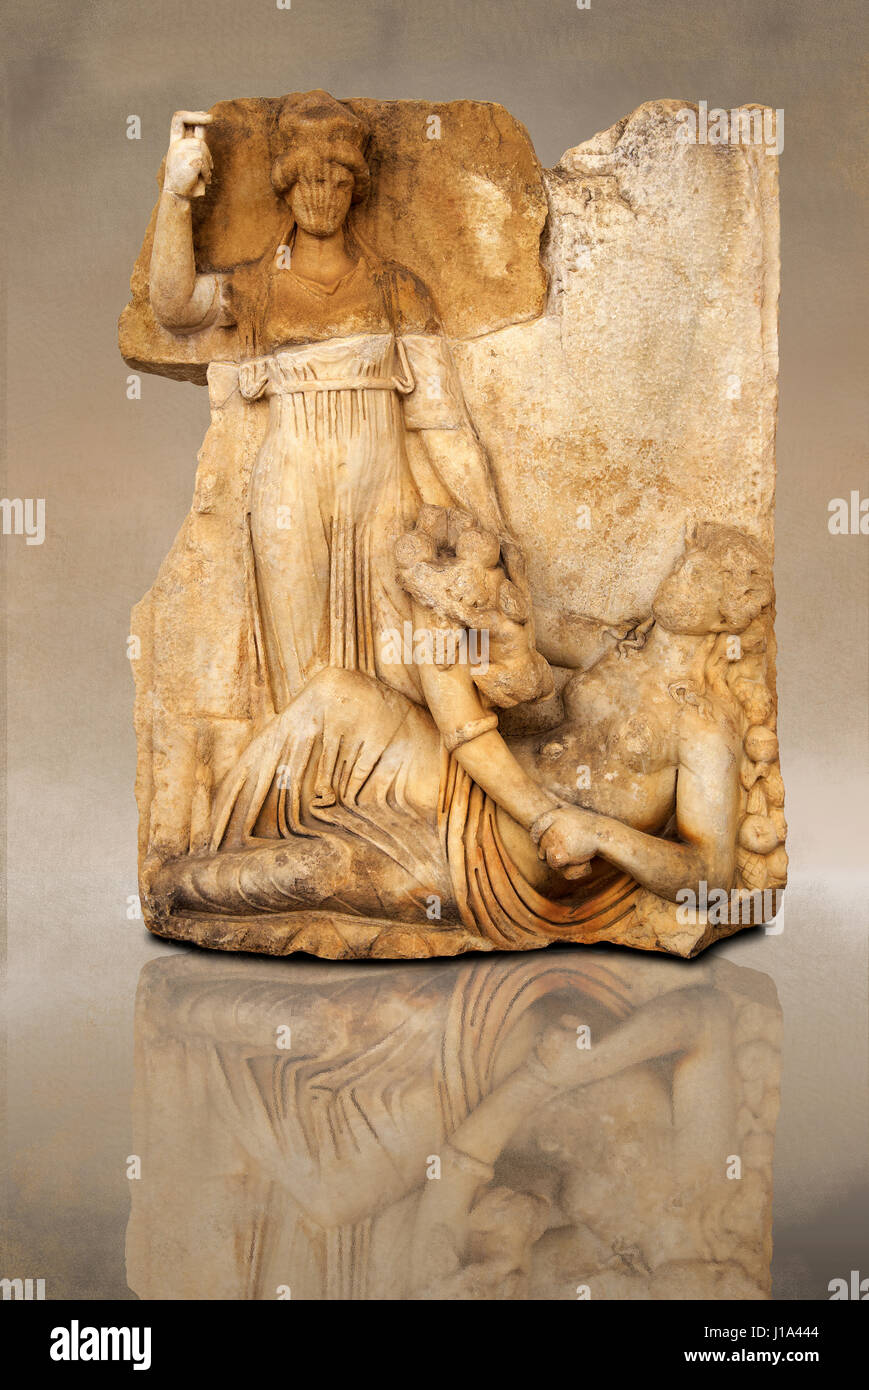 Tempio romano scultura limitatrice di Roma, Aphrodisias museo, Aphrodisias, Turchia Foto Stock